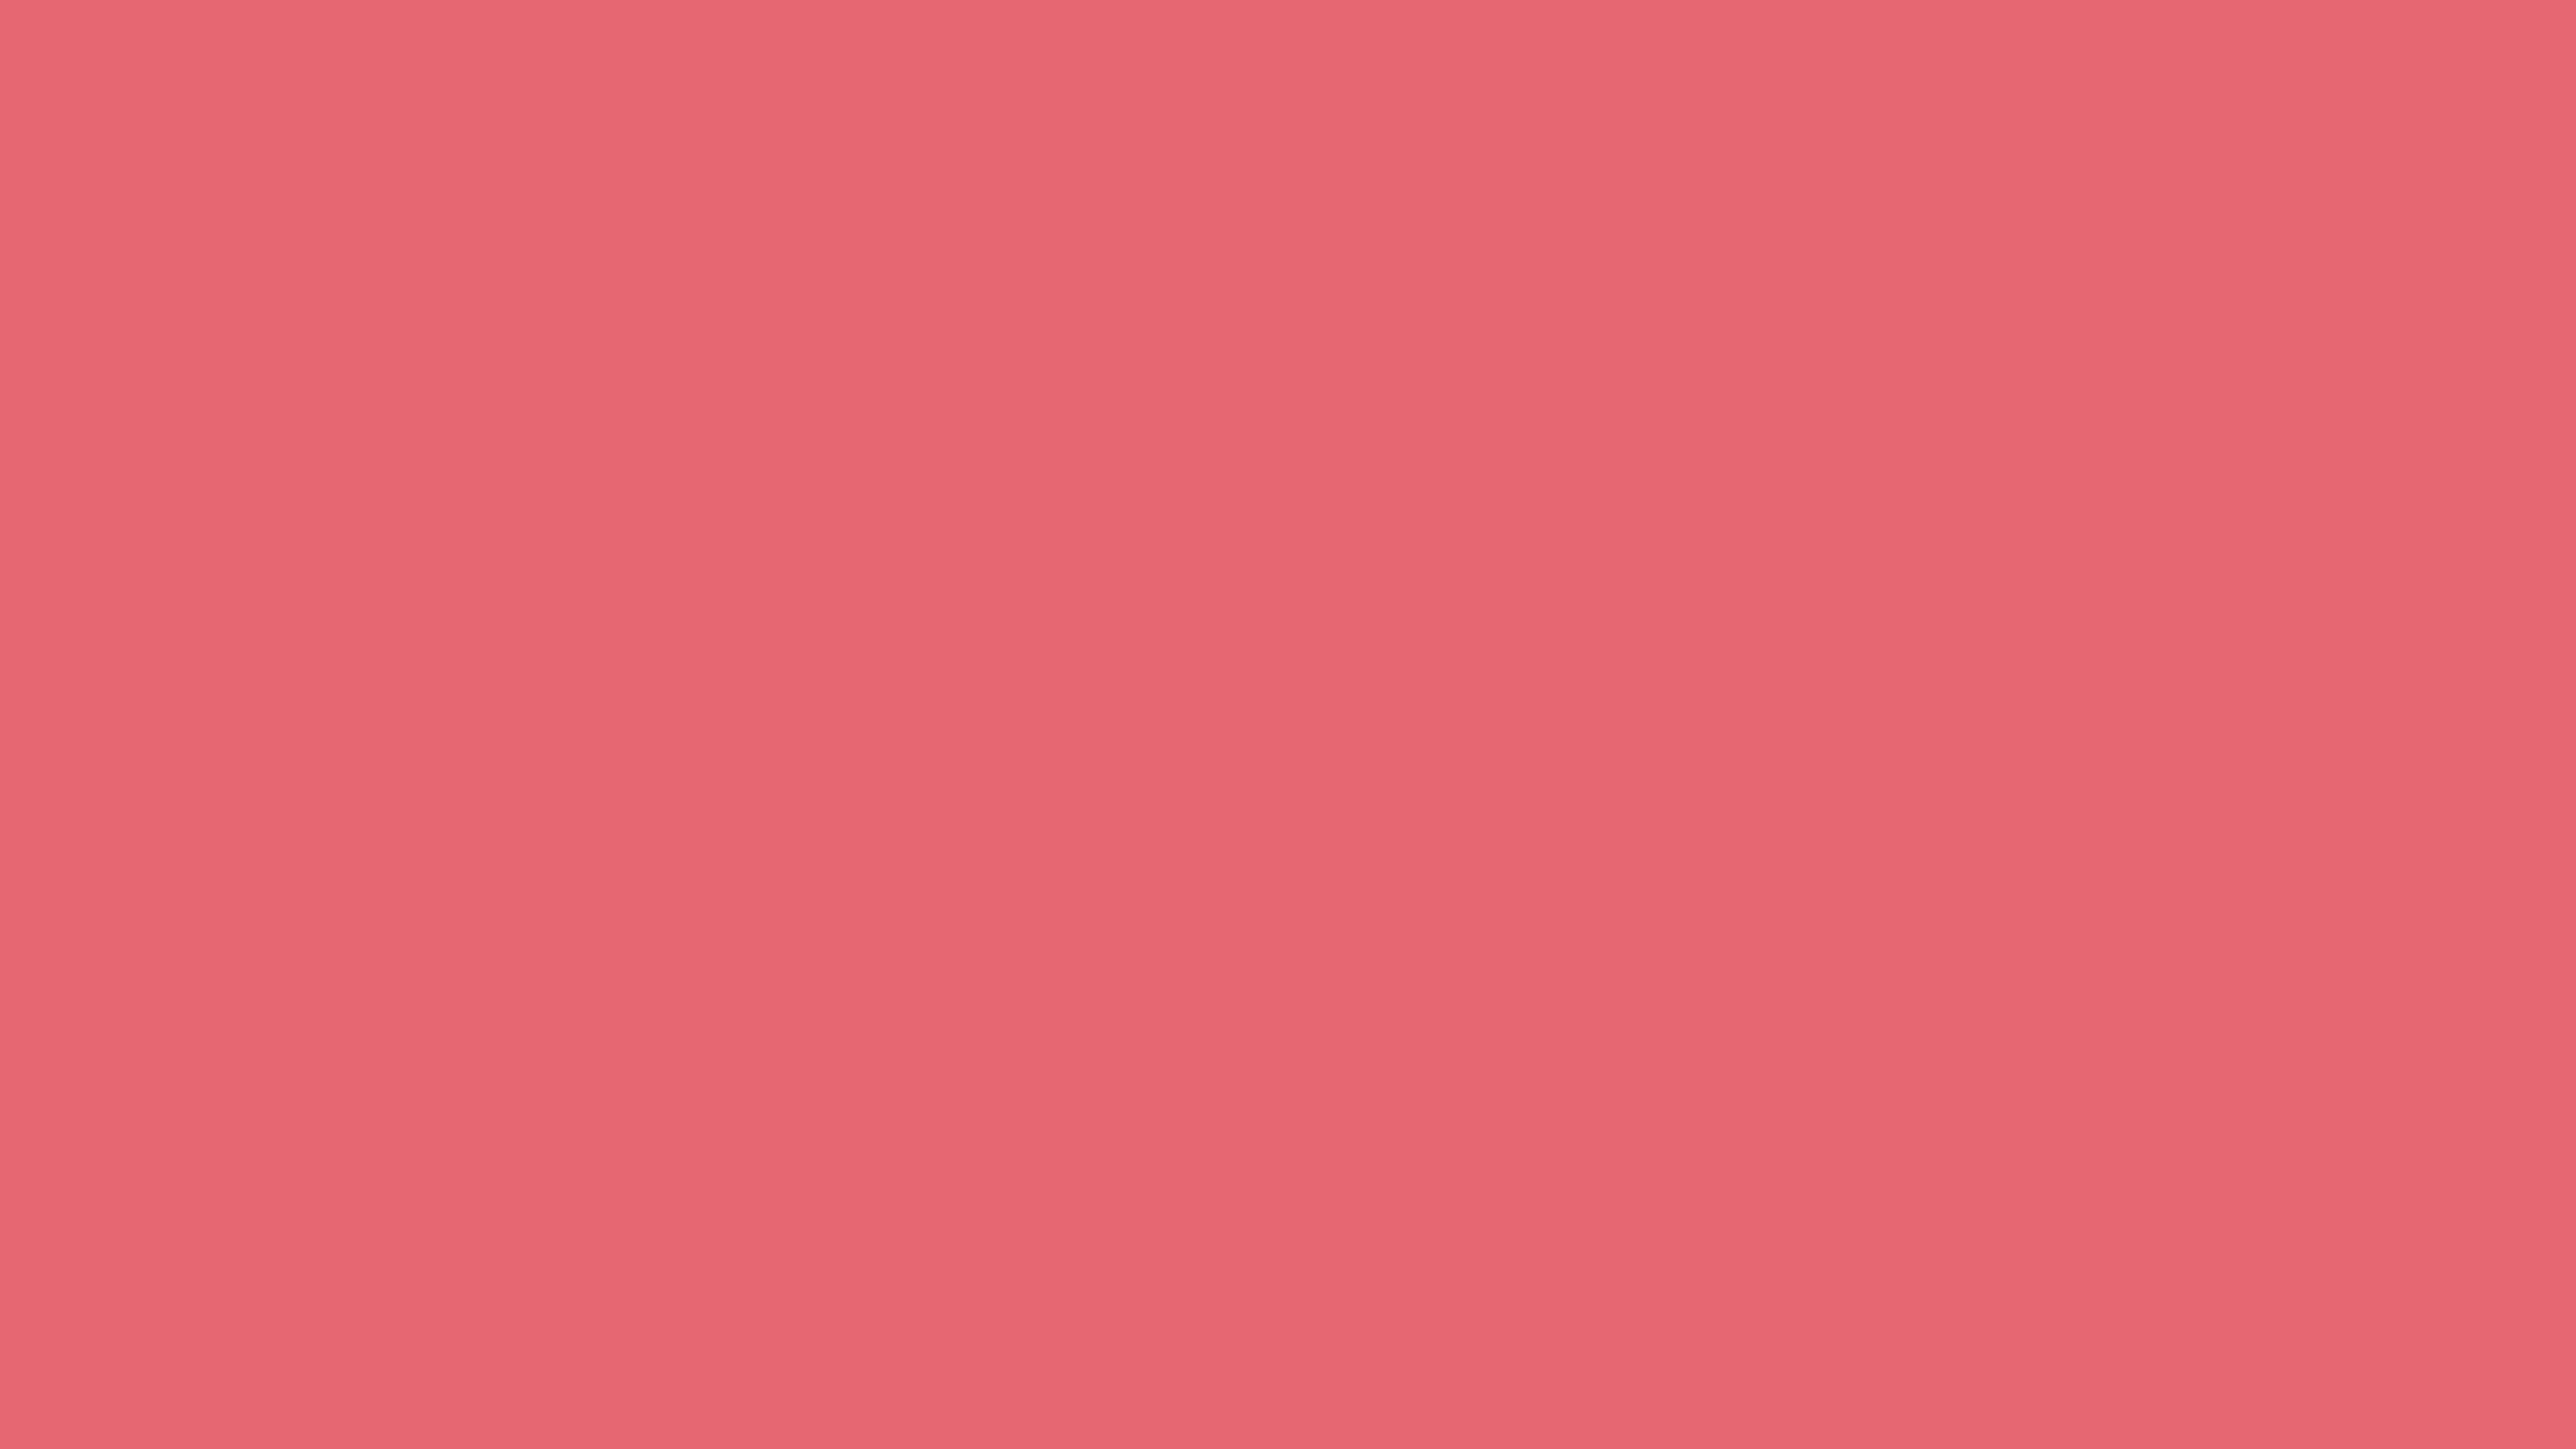 4096x2304 Light Carmine Pink Solid Color Background